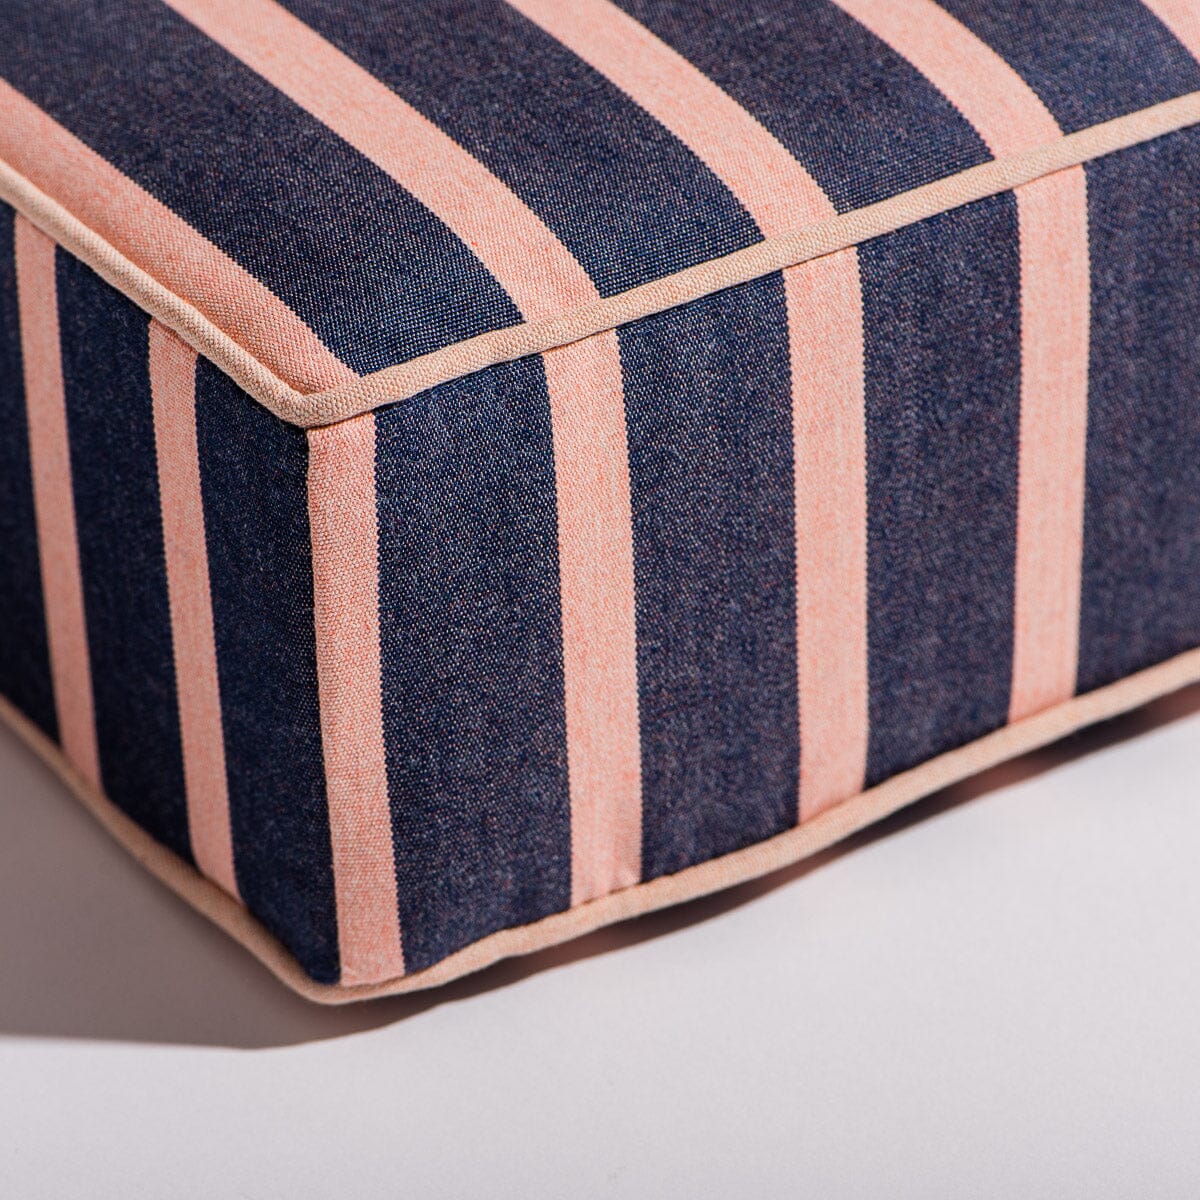 The Al Fresco Sun Lounger Cushion - Monaco Navy And Pink Stripe Al Fresco Sun Lounger Cushions Business & Pleasure Co 